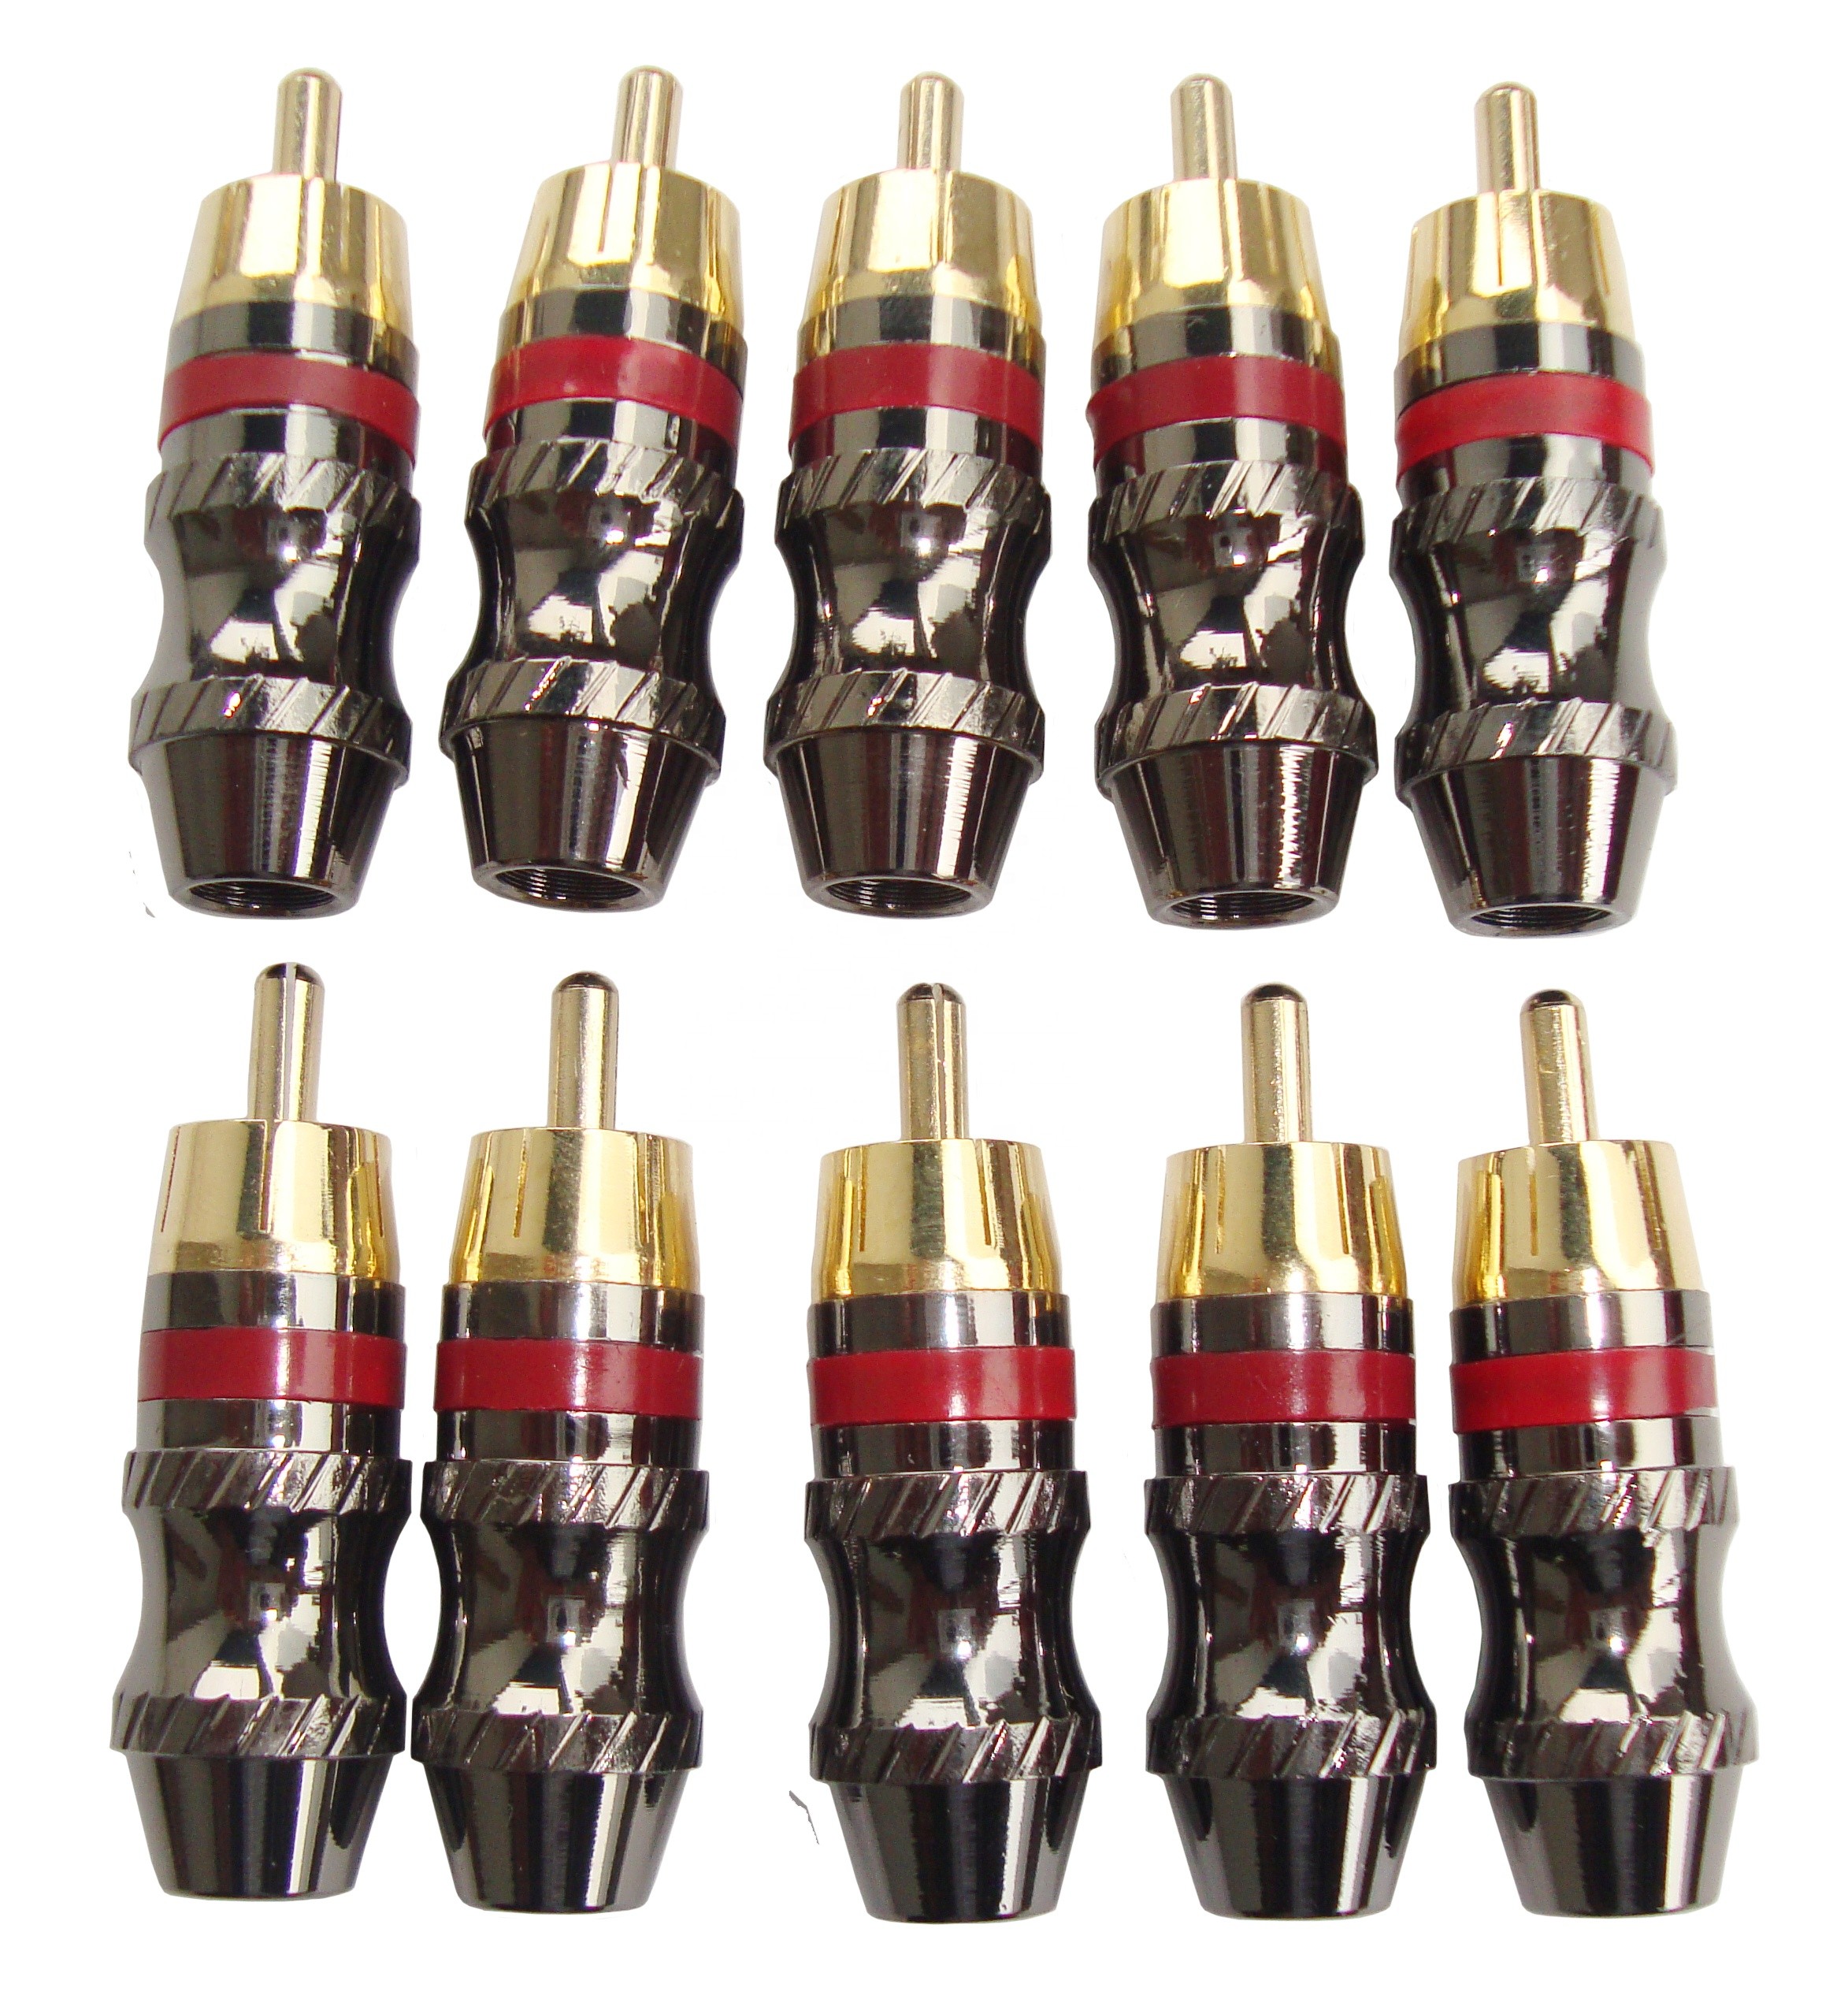 High performance brass RCA connector